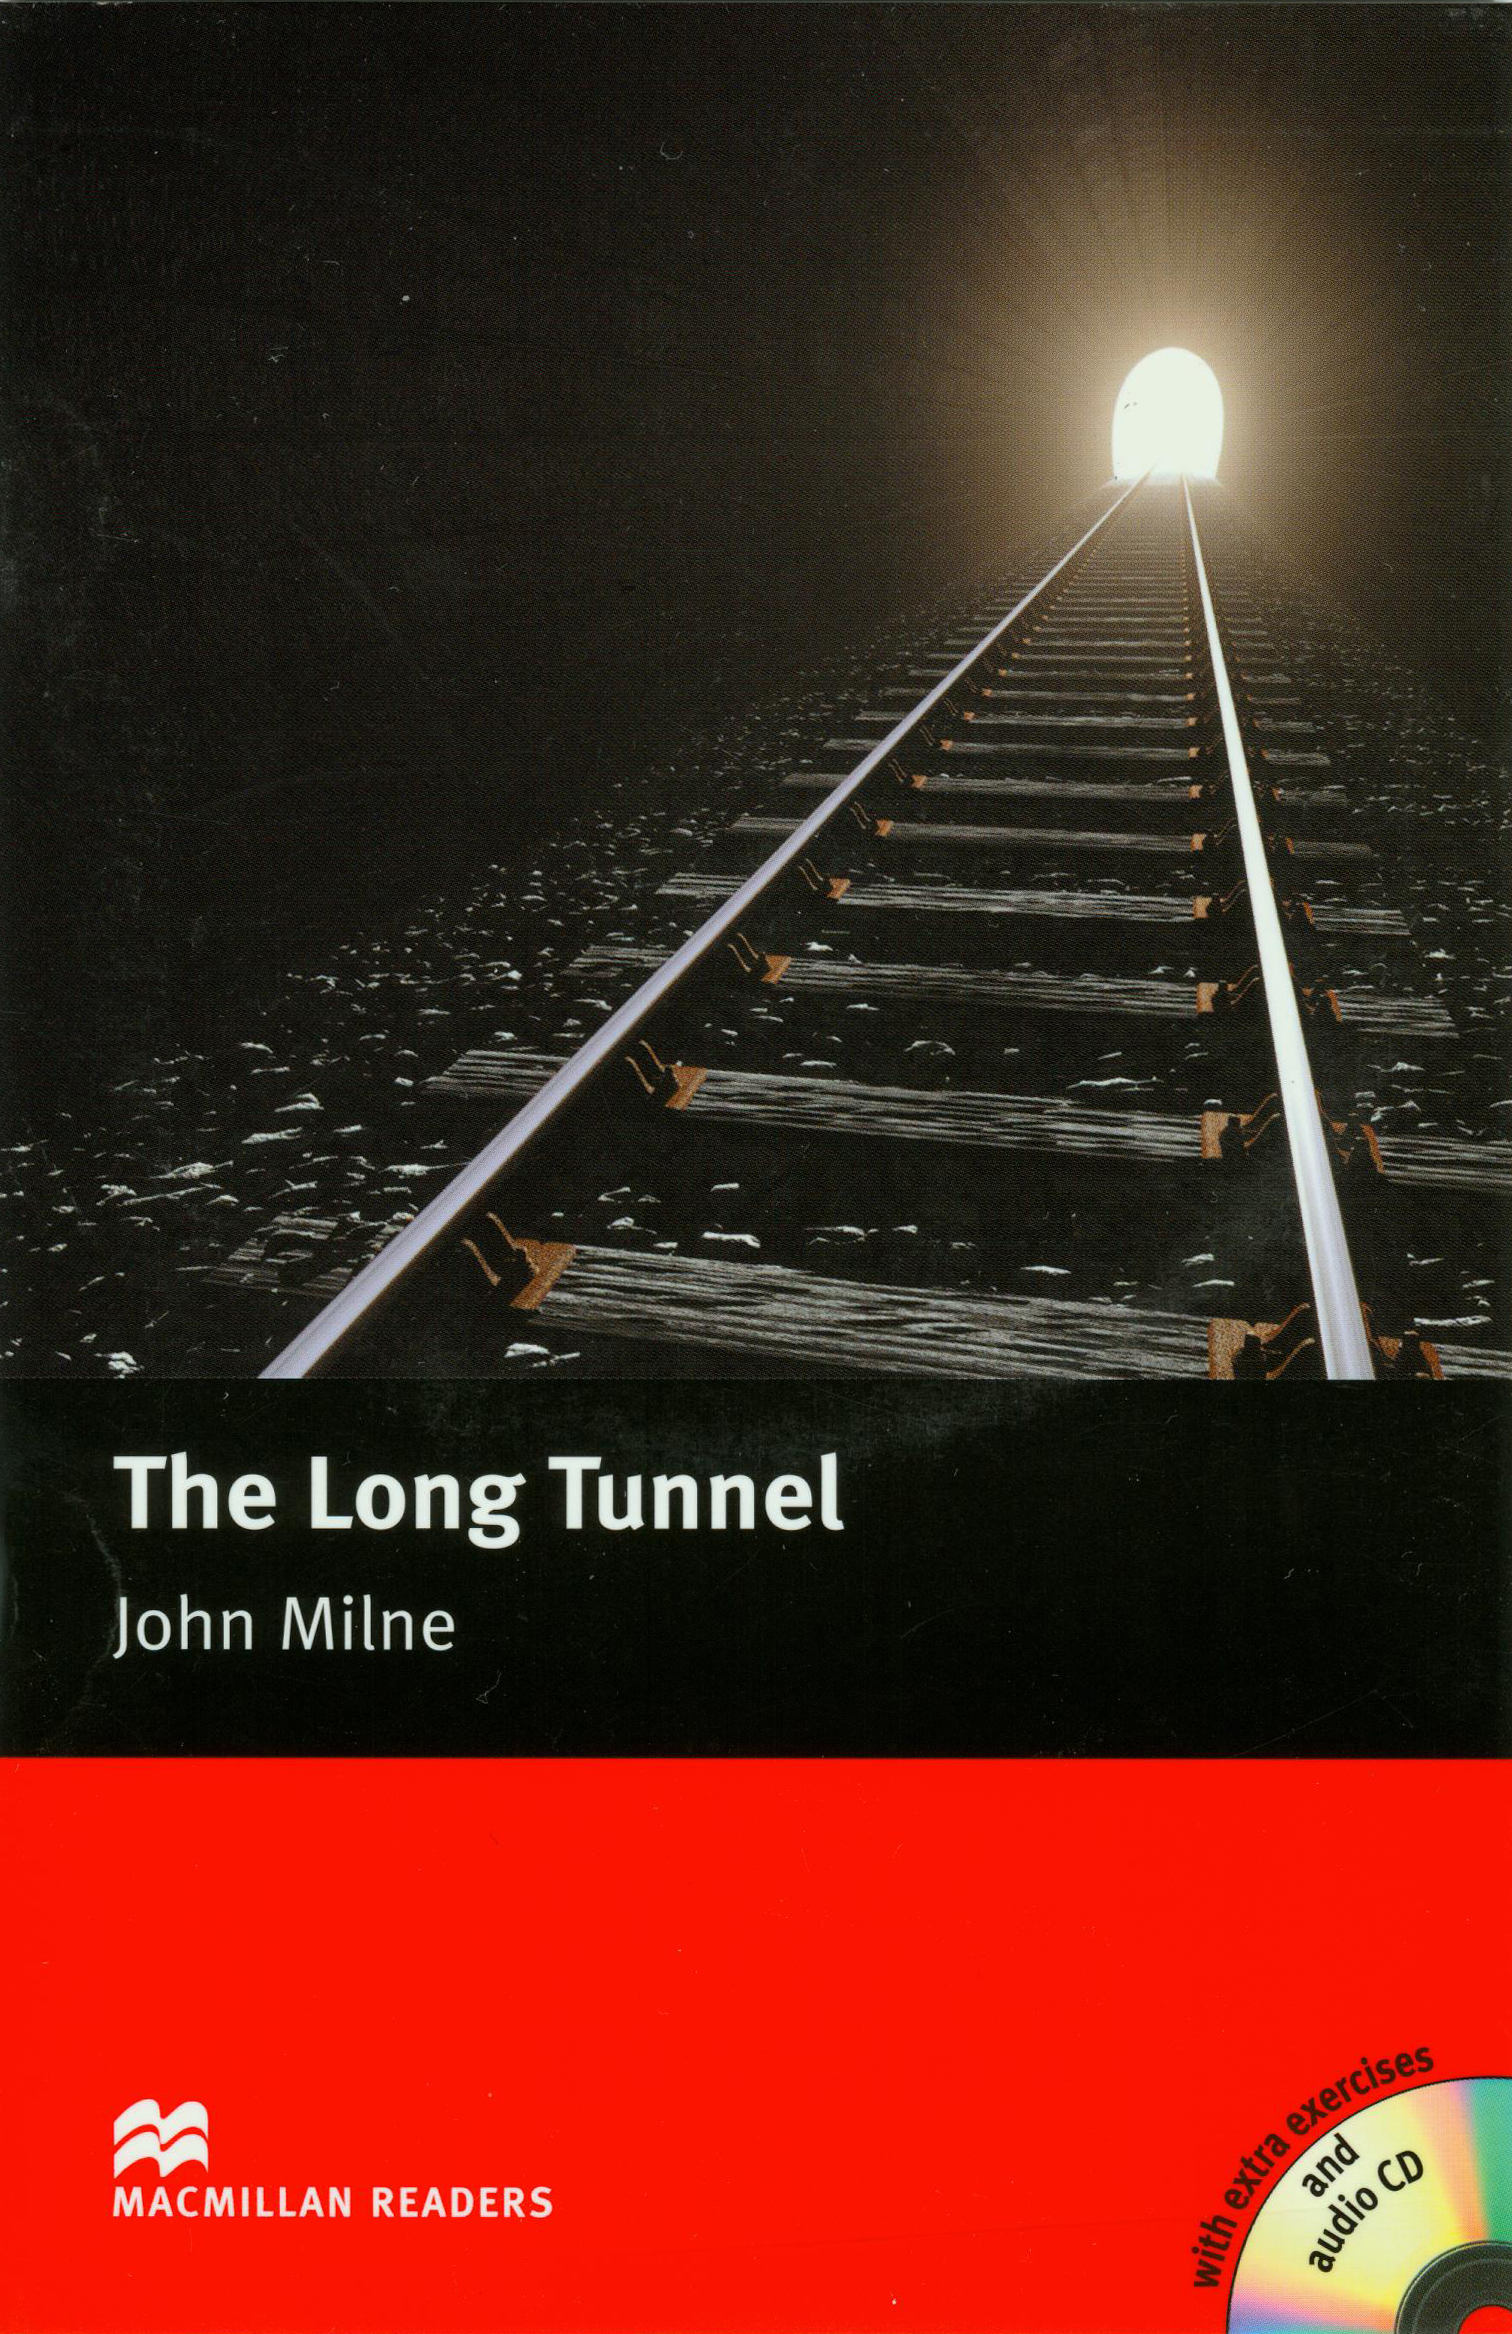 download the long tunnel john milne pdf reader